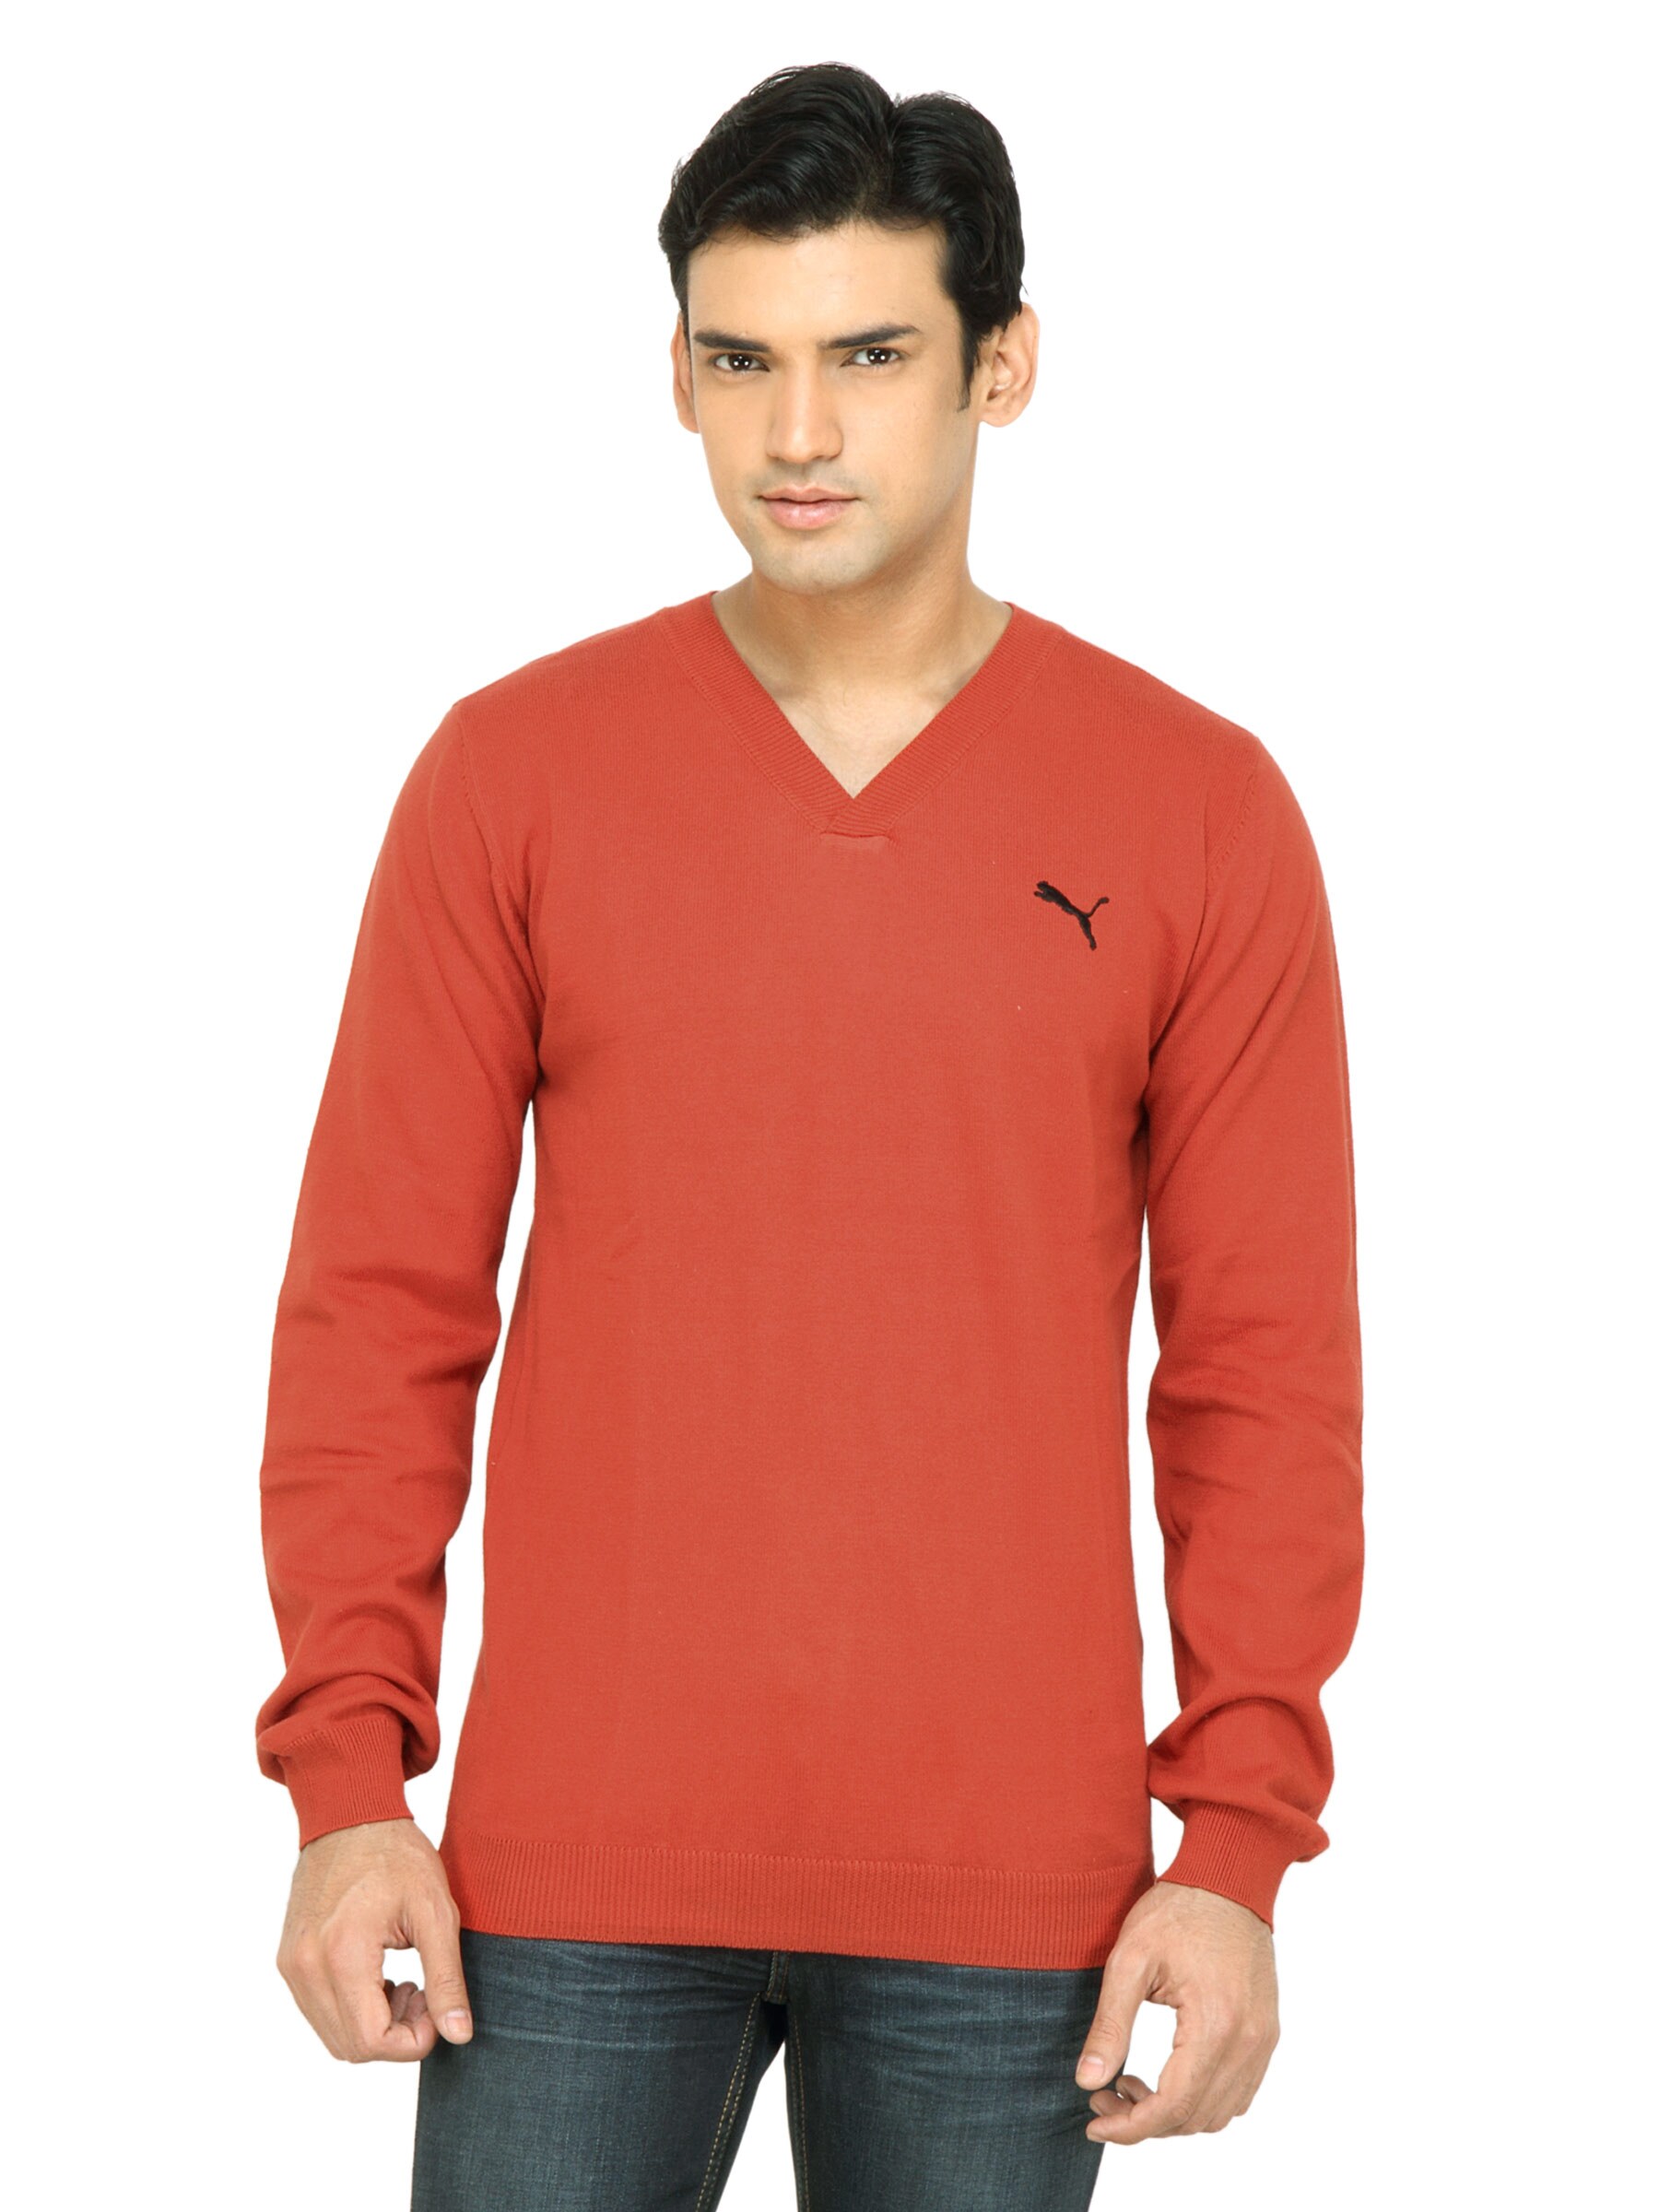 Puma Men Solid Red Sweater